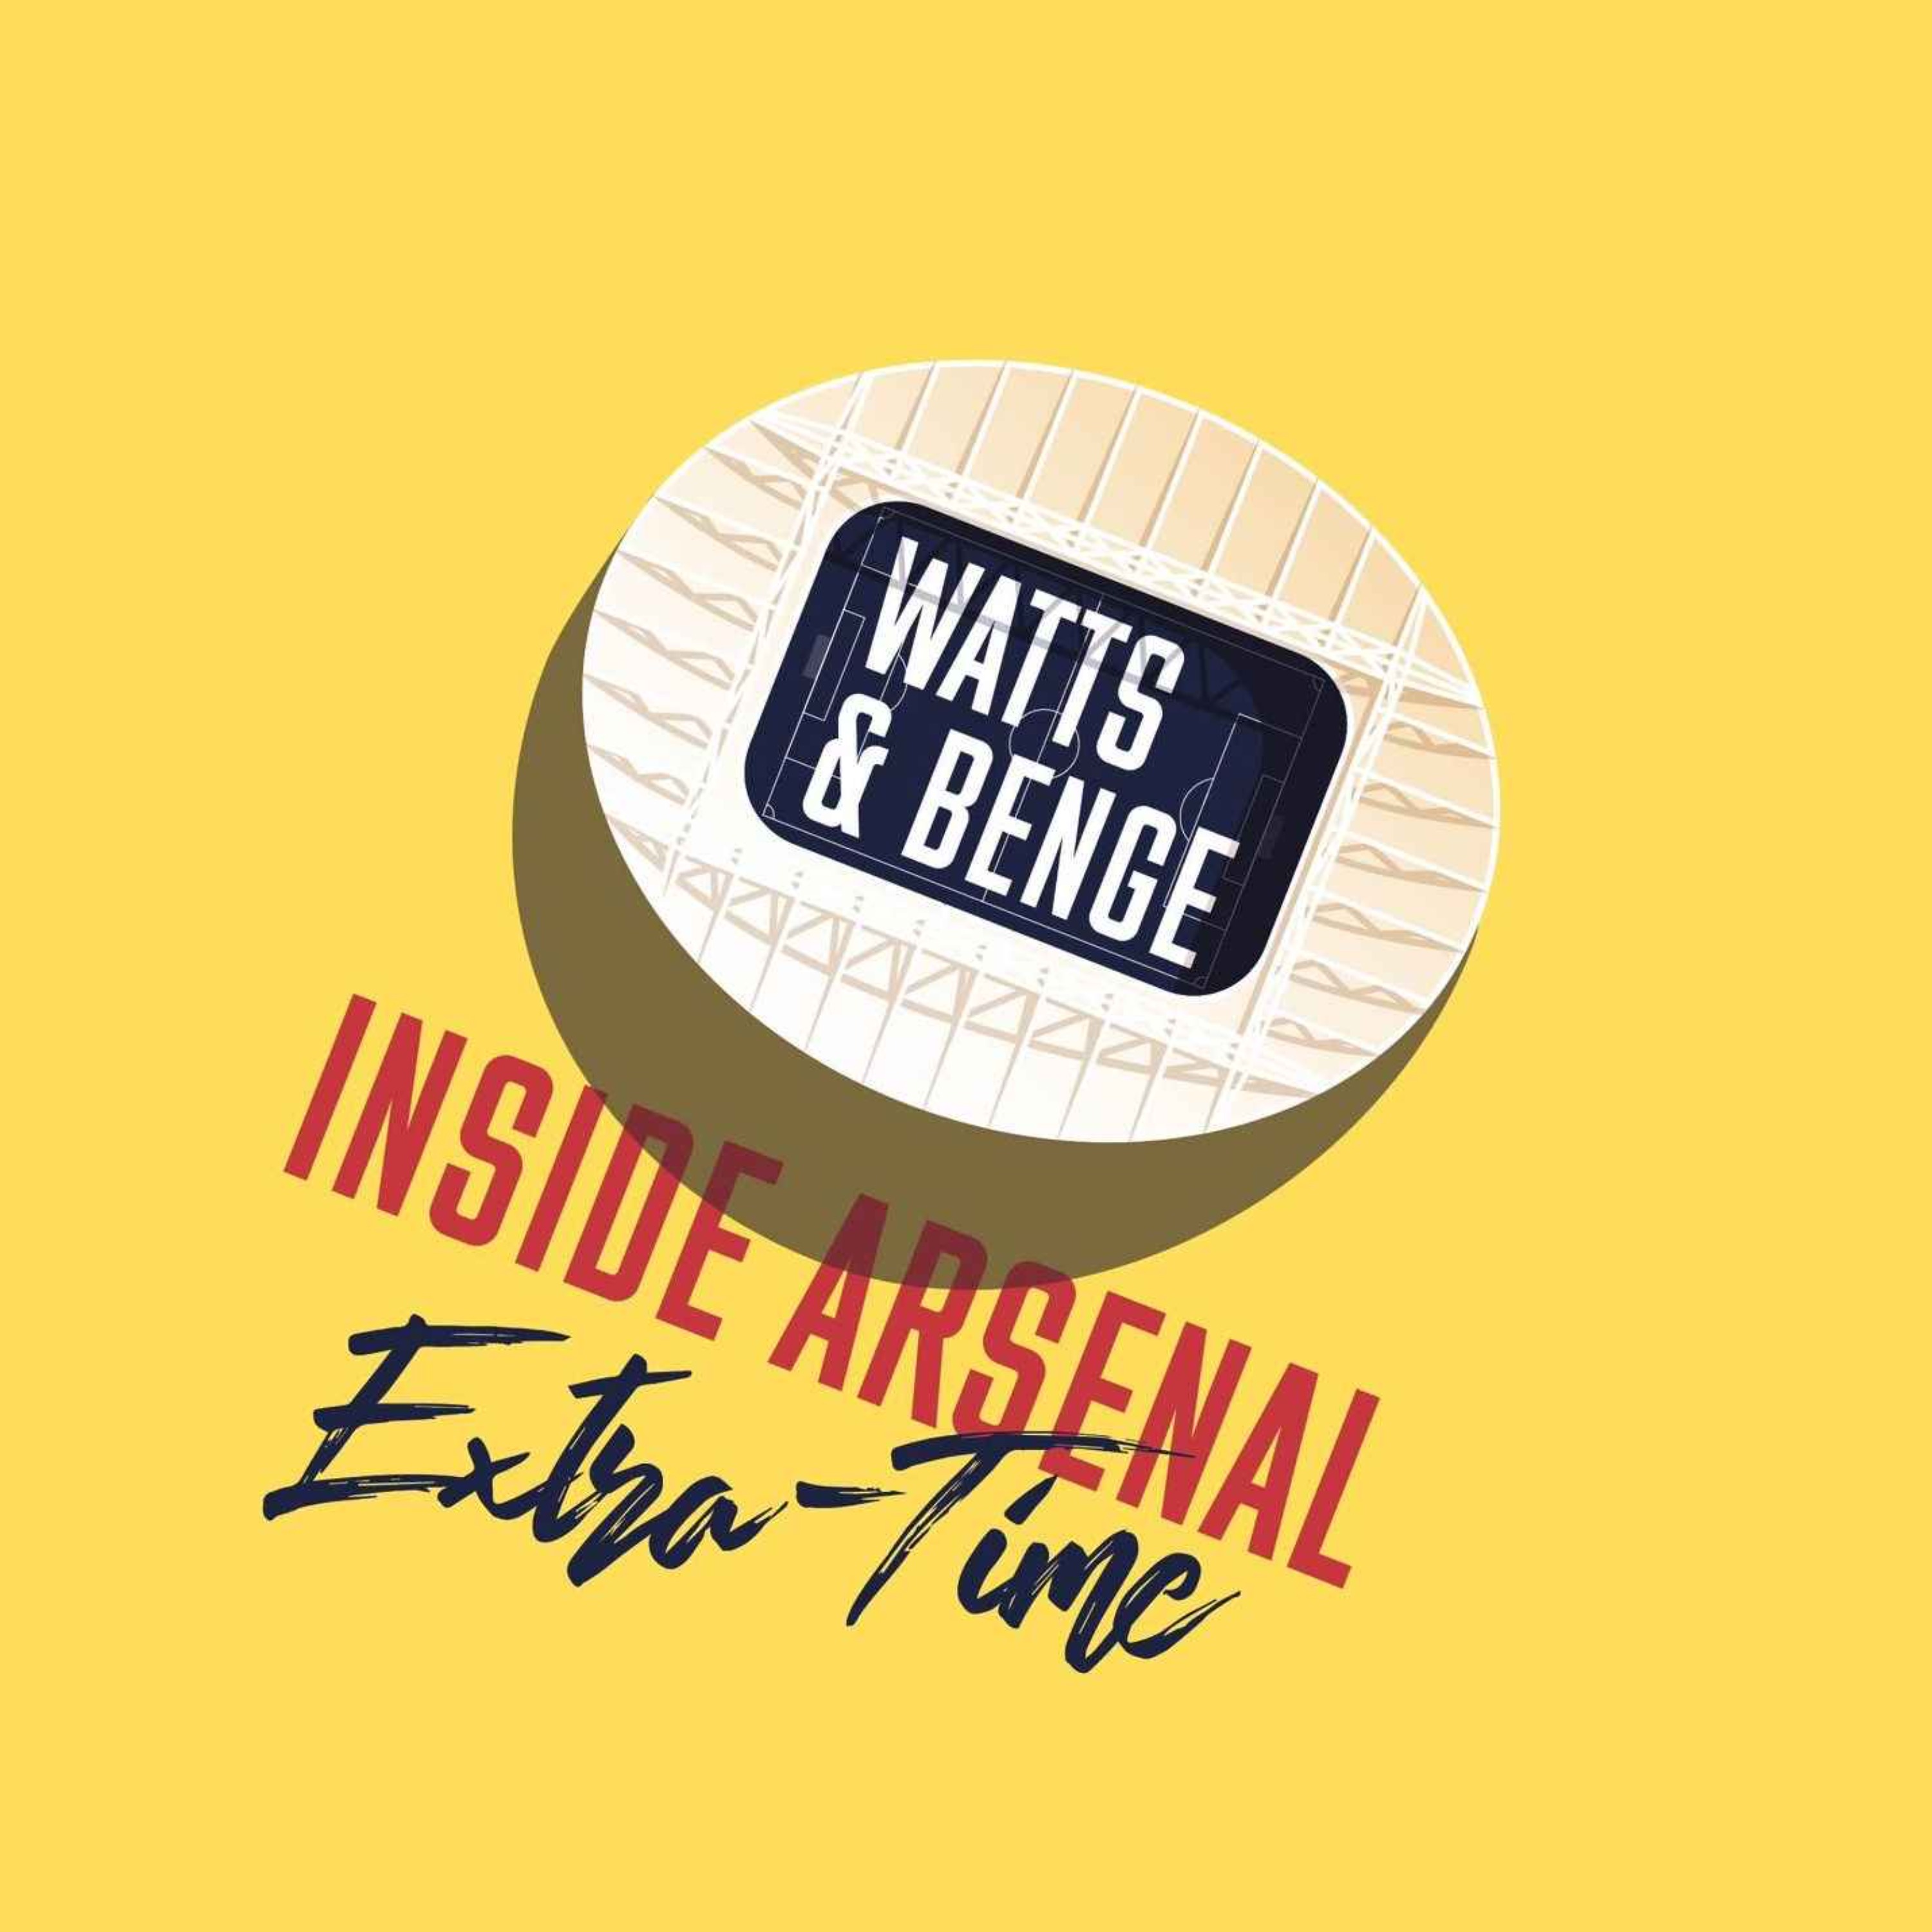 Extra-time with James Benge - Smith Rowe’s future + Arteta’s changes & who starts vs Brighton